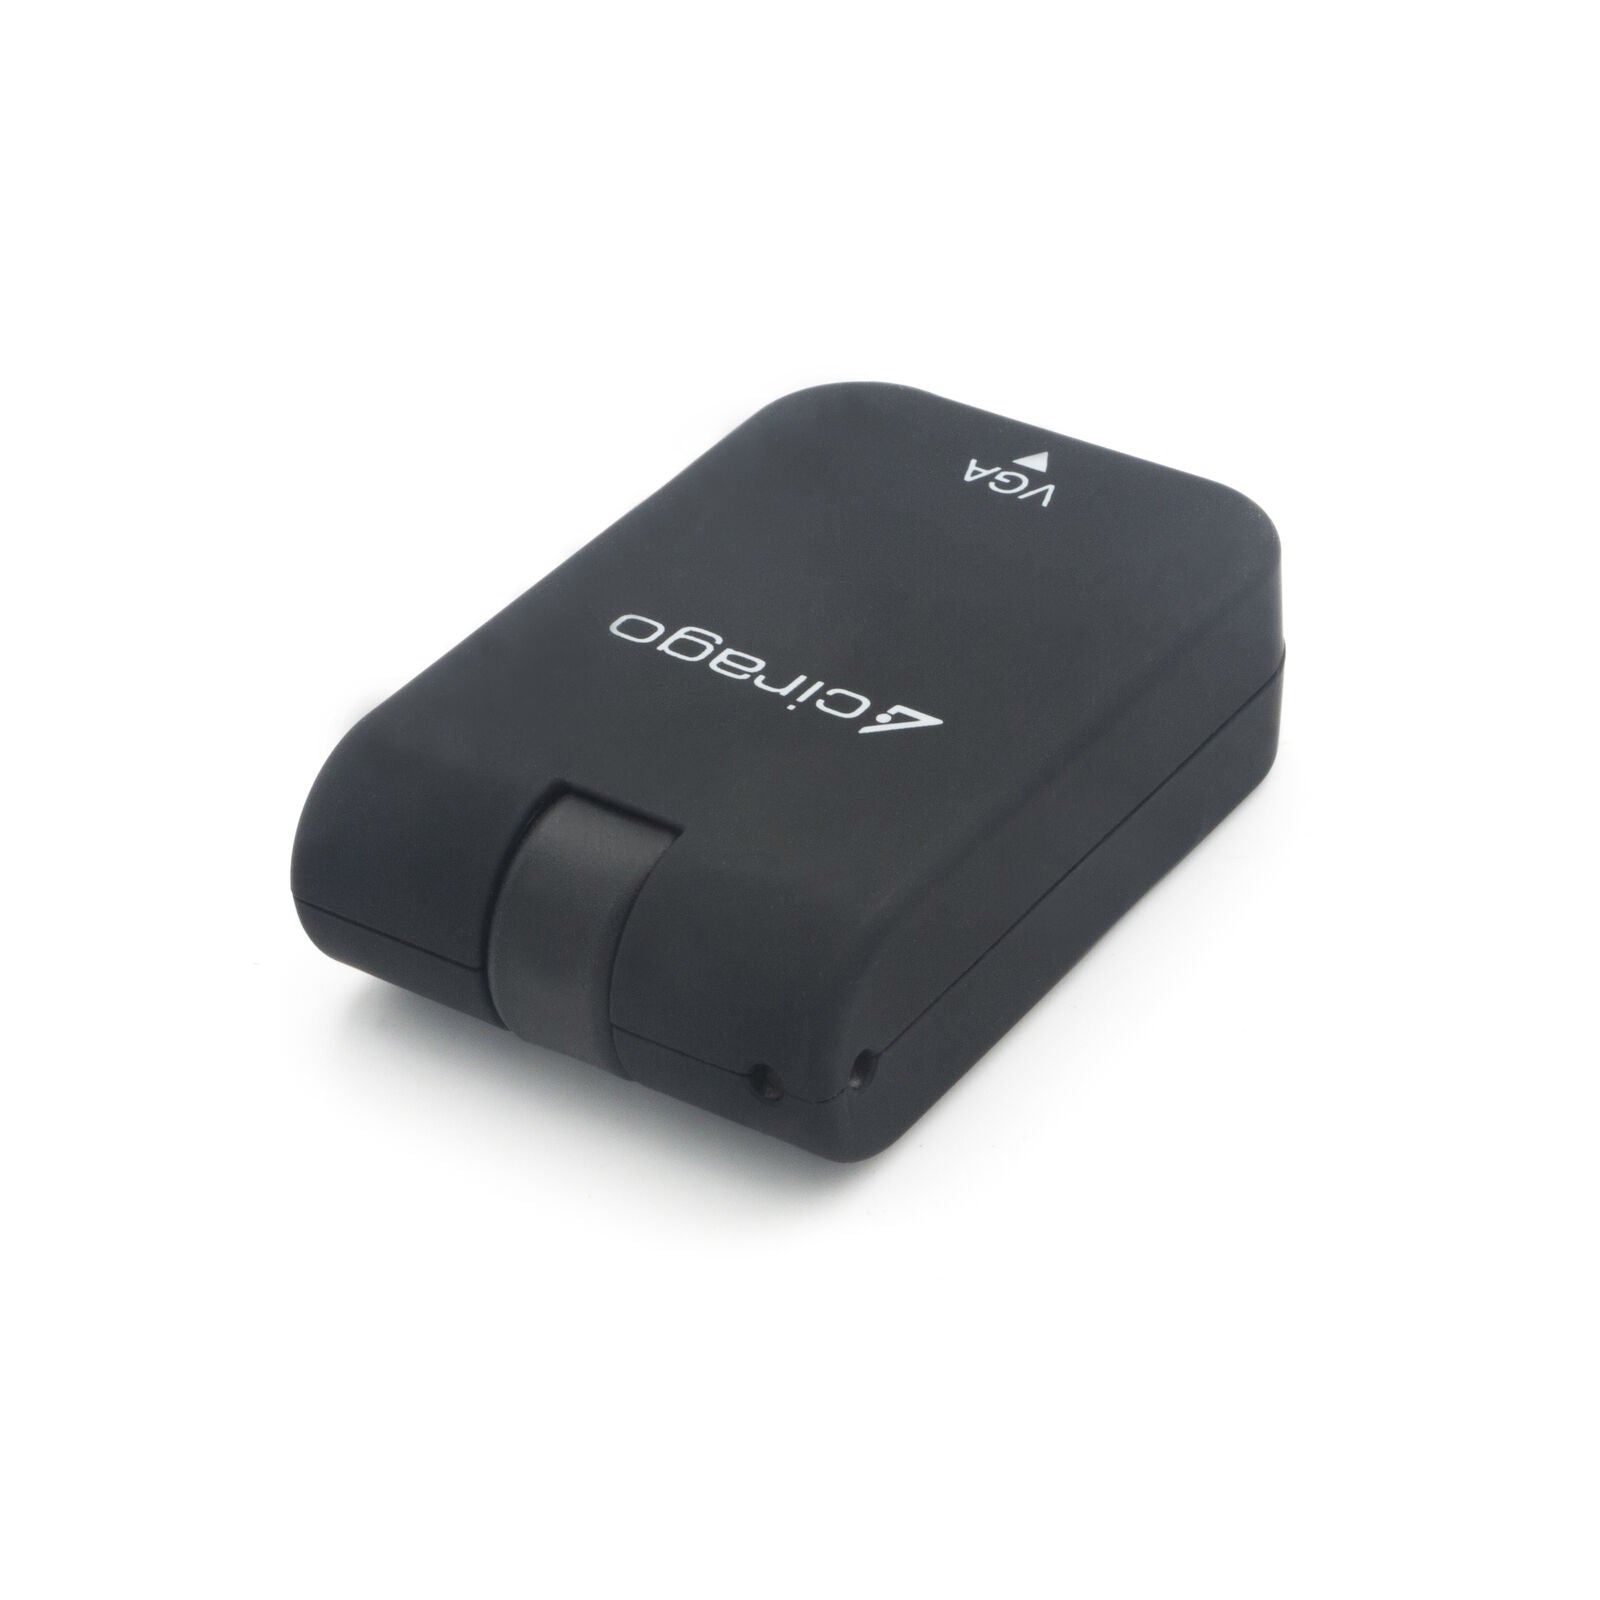 Cirago USB-C To VGA Mini Cable Adapter HD Video Converter USB 3.1 for MacBook